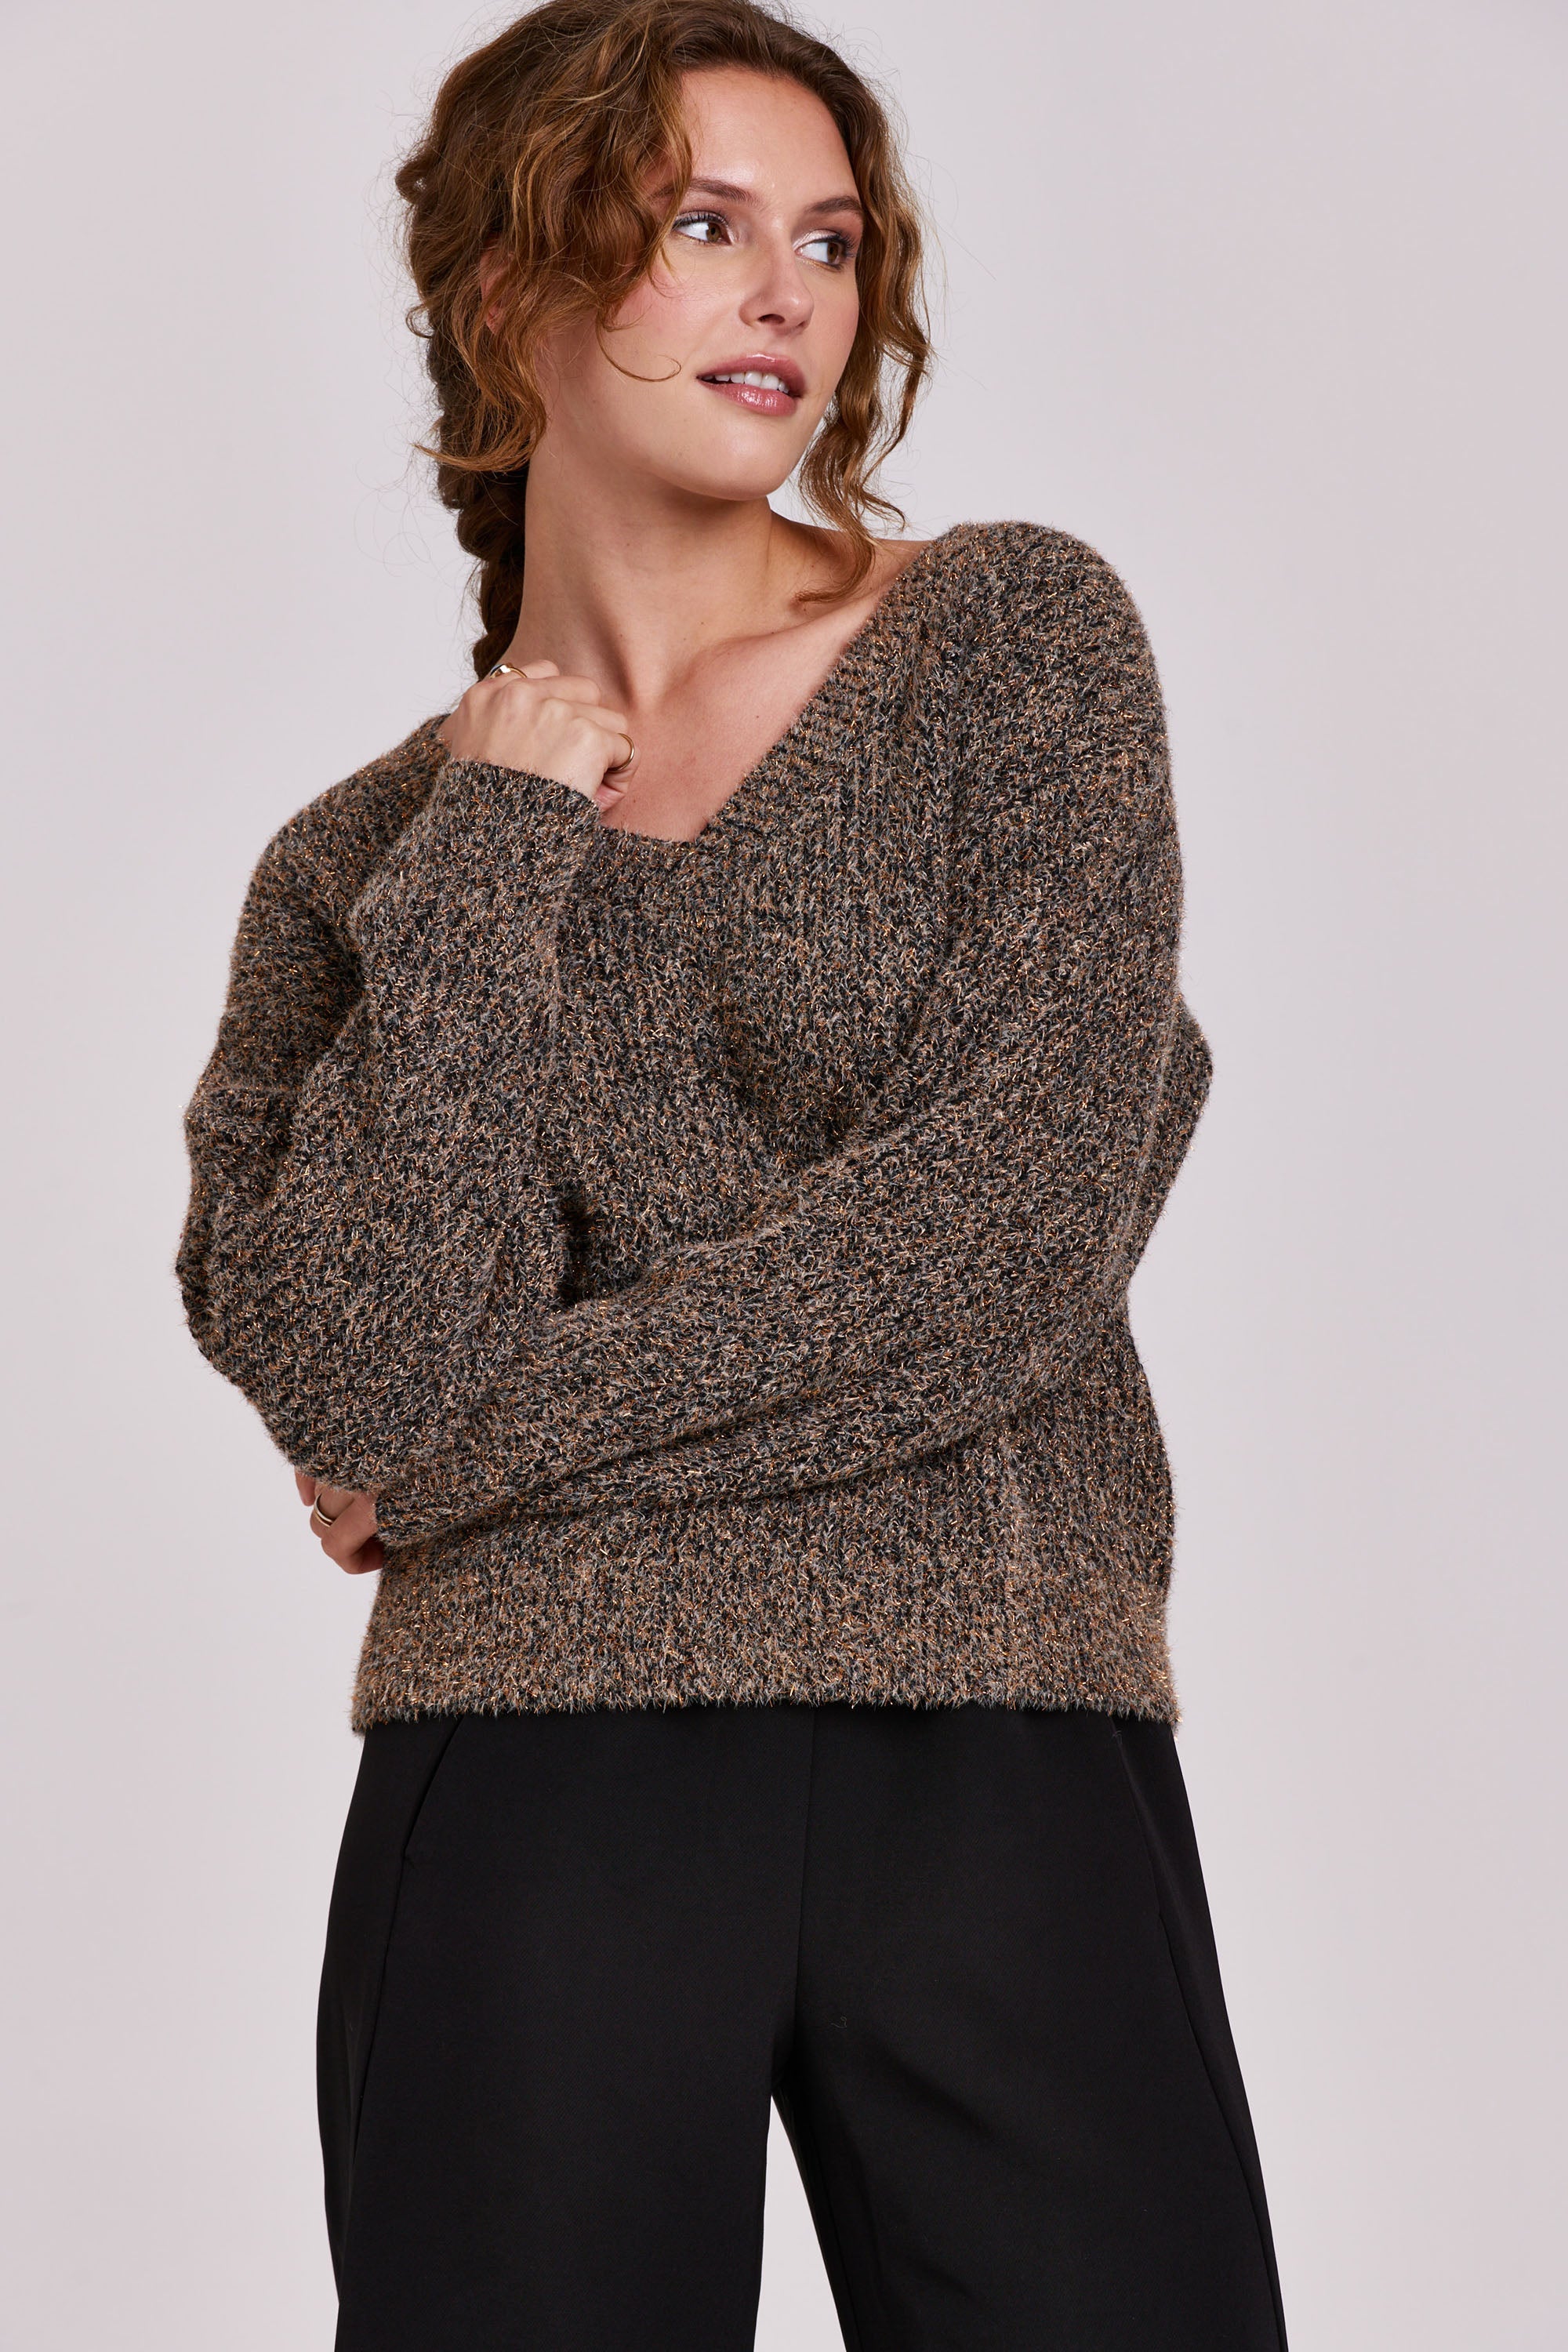 rue-textured-yarn-sweater-copper-metallic-melange